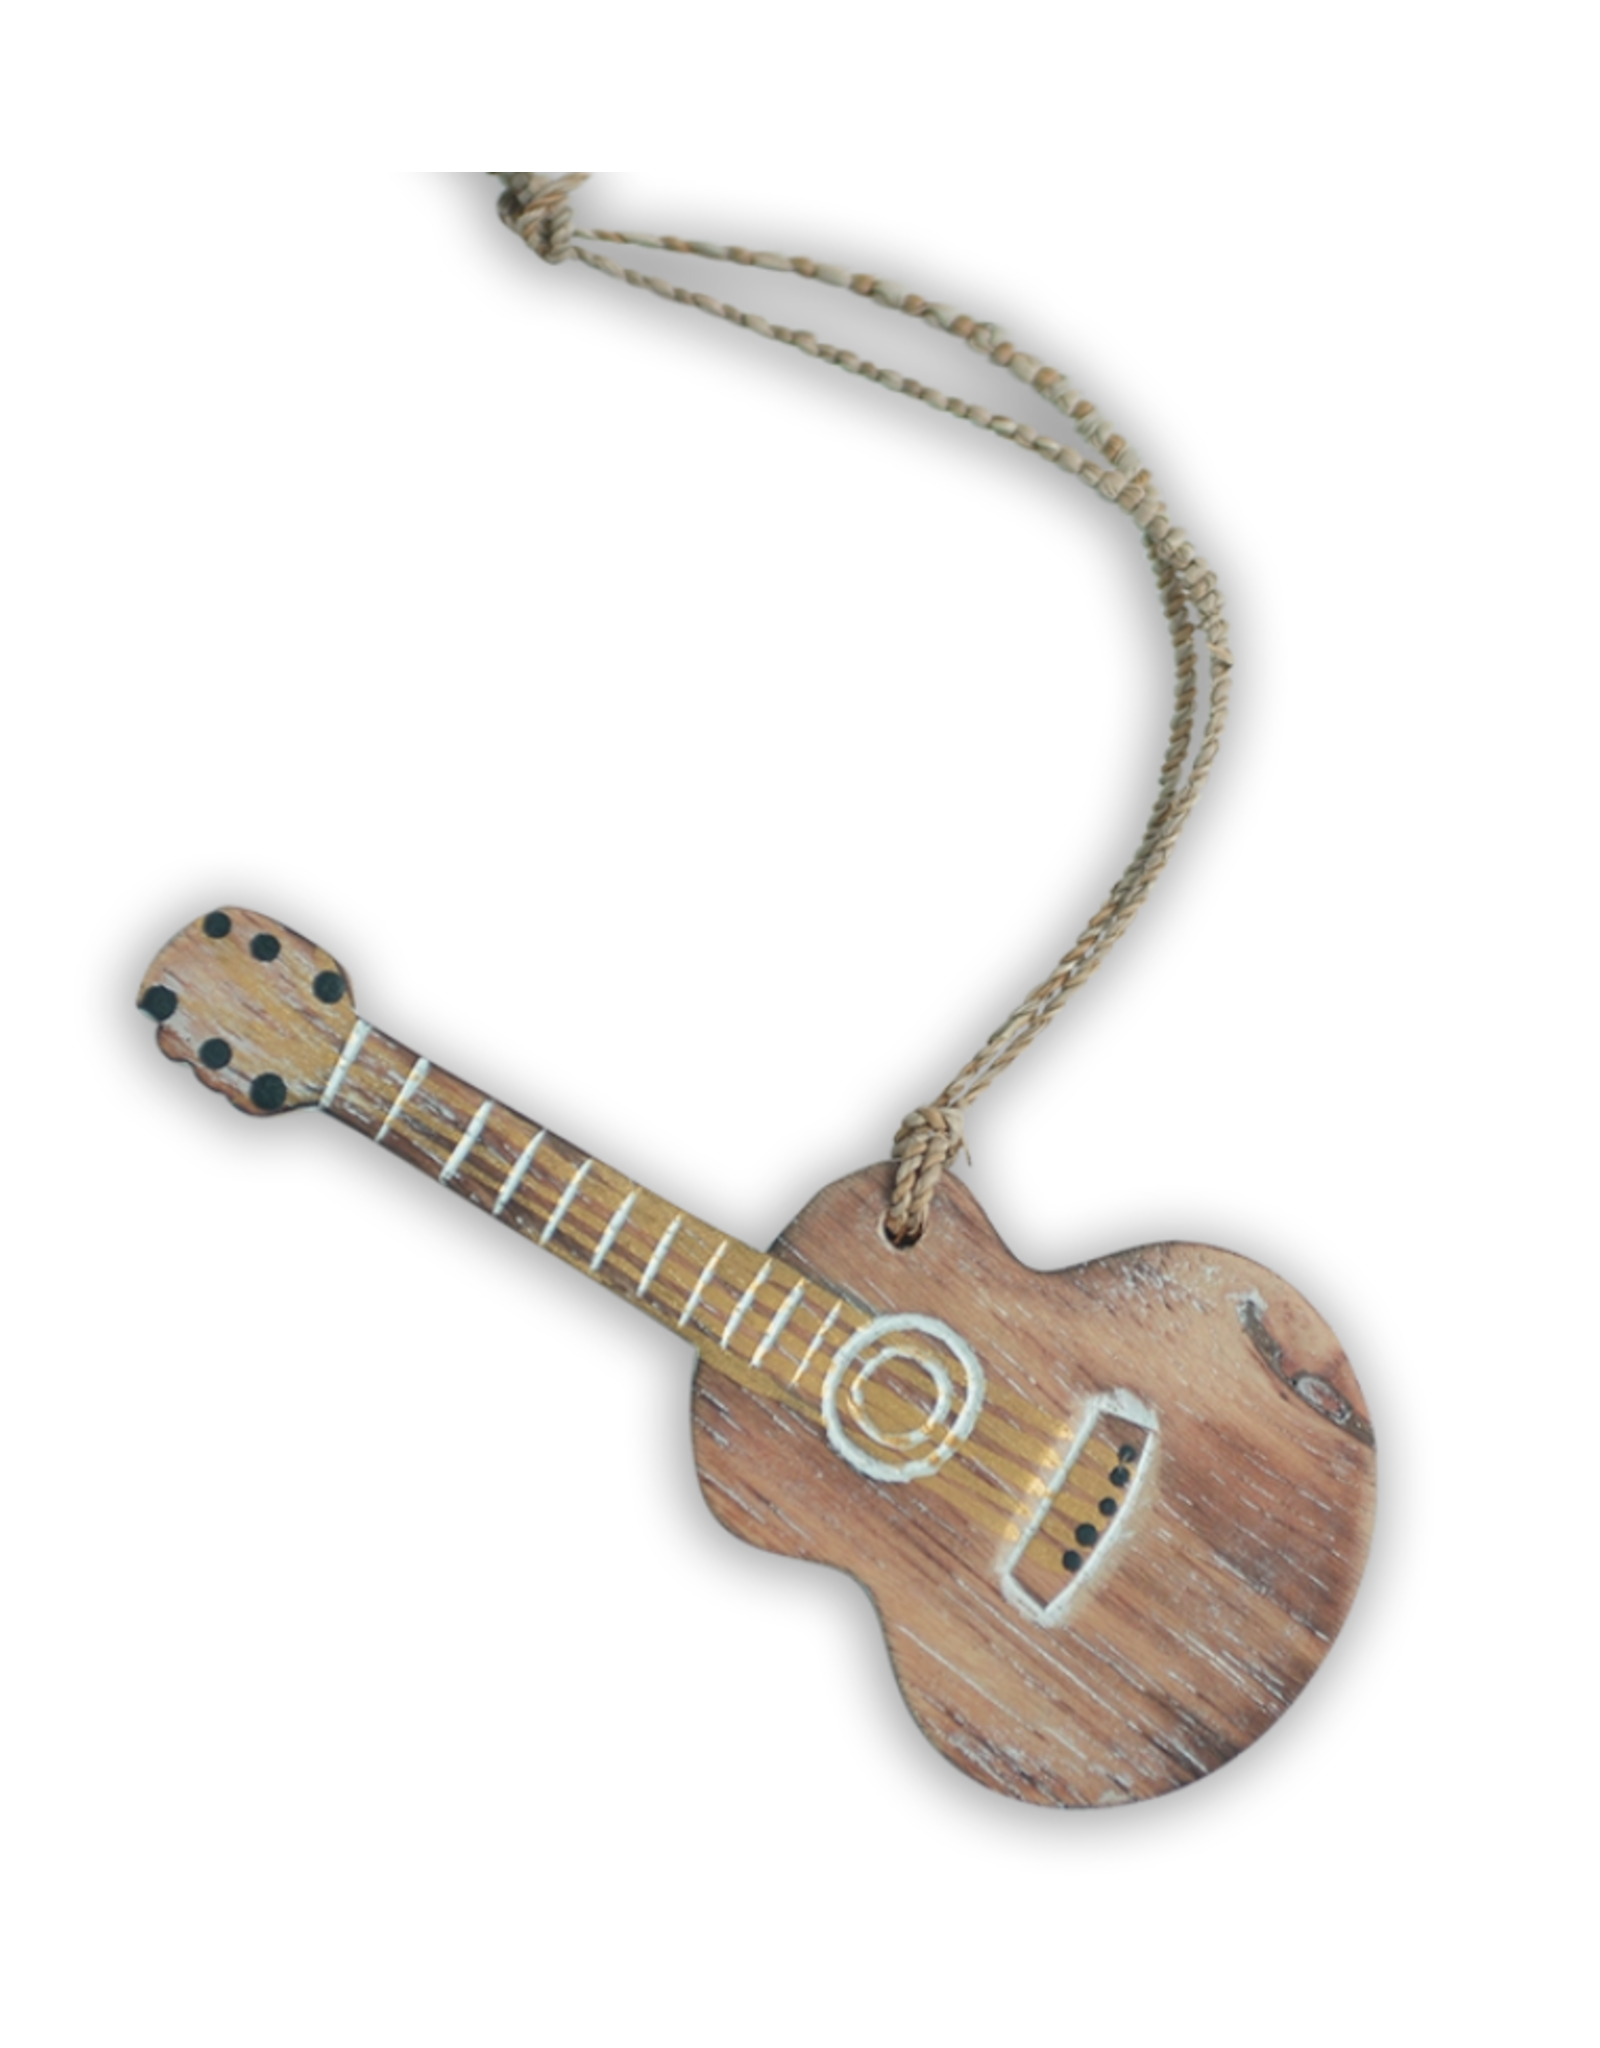 Indonesia Wooden Guitar Ornament, Indonesia